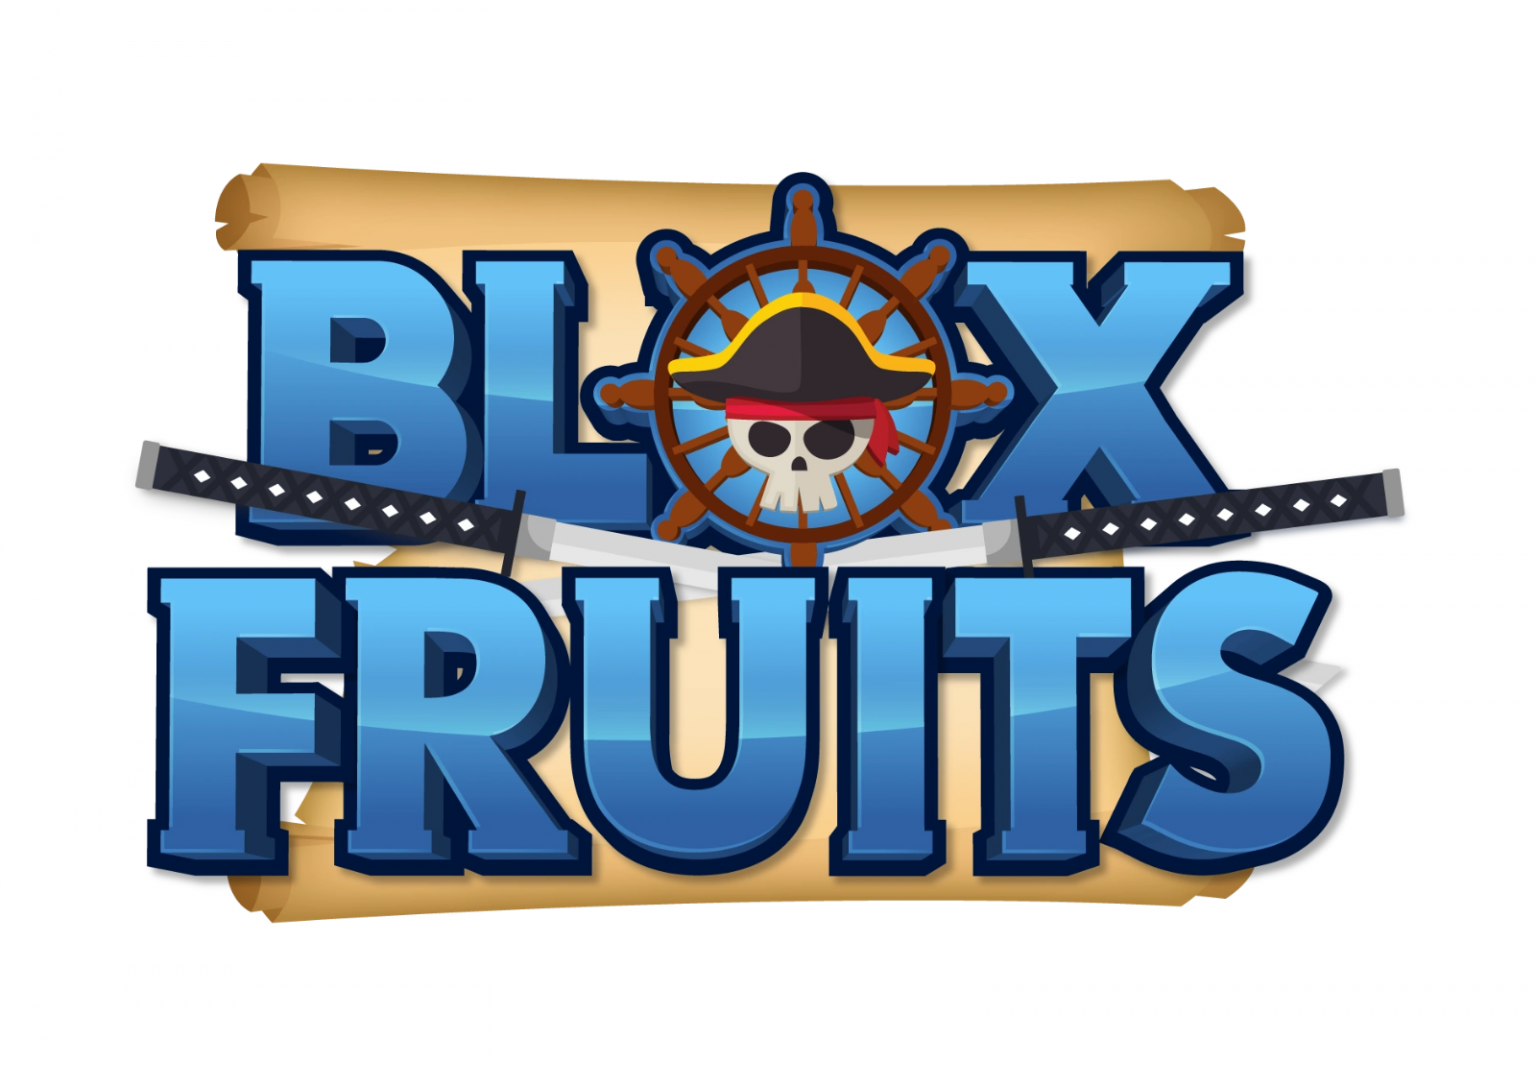 BLOX Fruits. РОБЛОКС BLOX Fruits. BLOX Fruits фрукты. Логотип Блокс фруит. Сток миража блокс фрукт